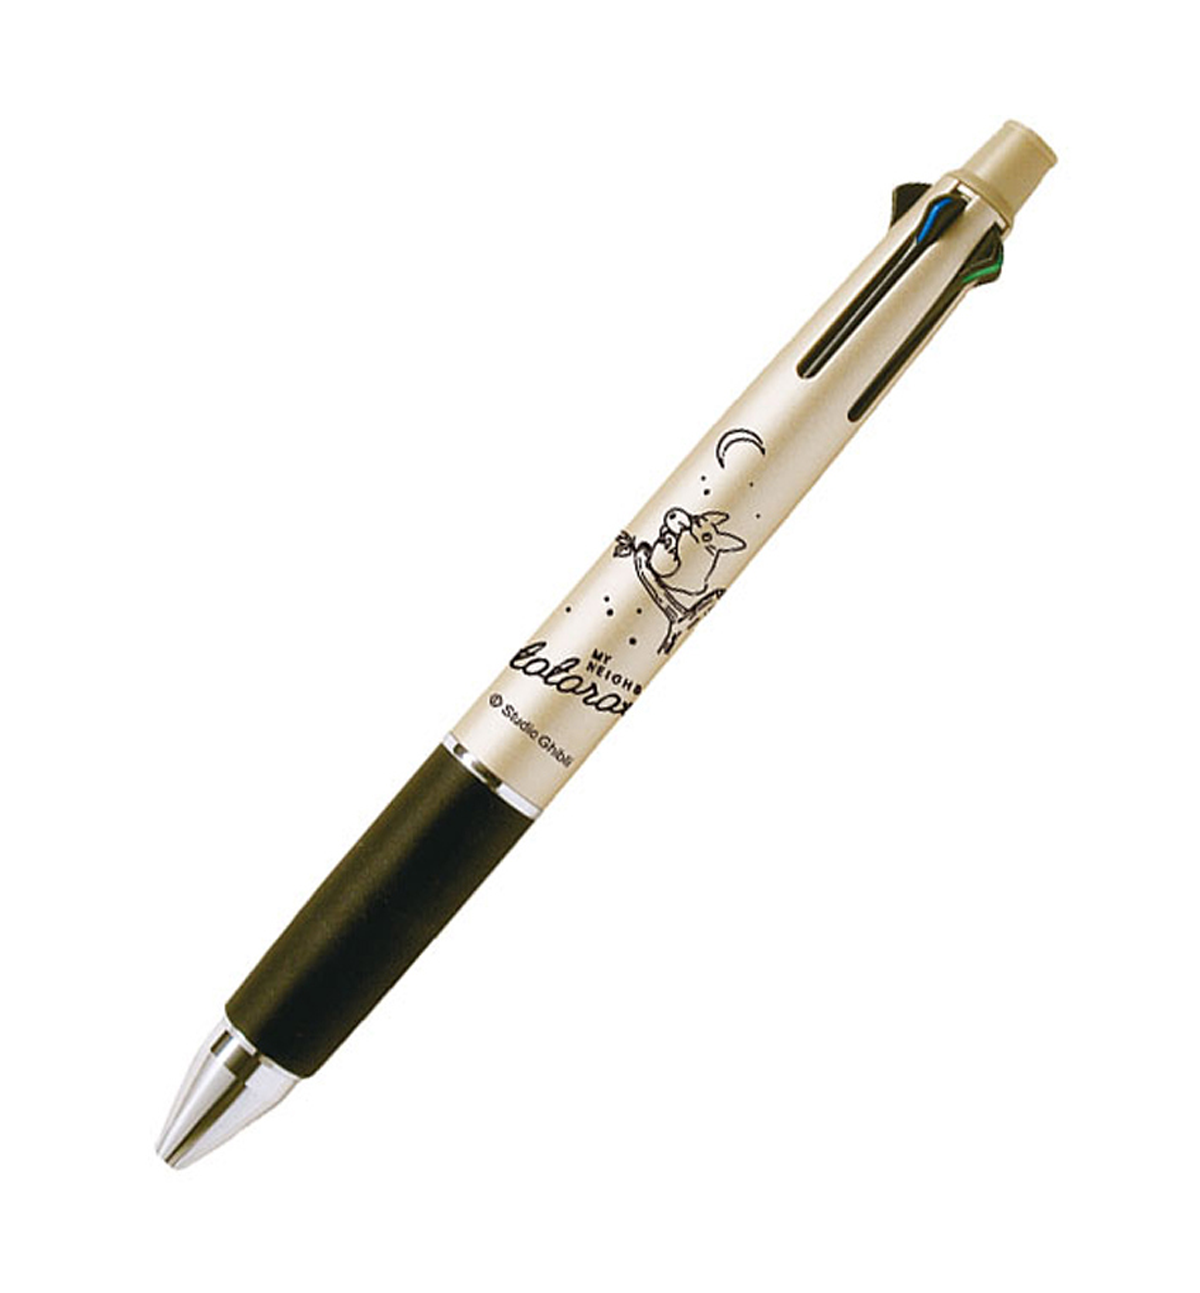 Spirited Away Jetstream 0.38 Pen + Pencil [My Neighbor Totoro]